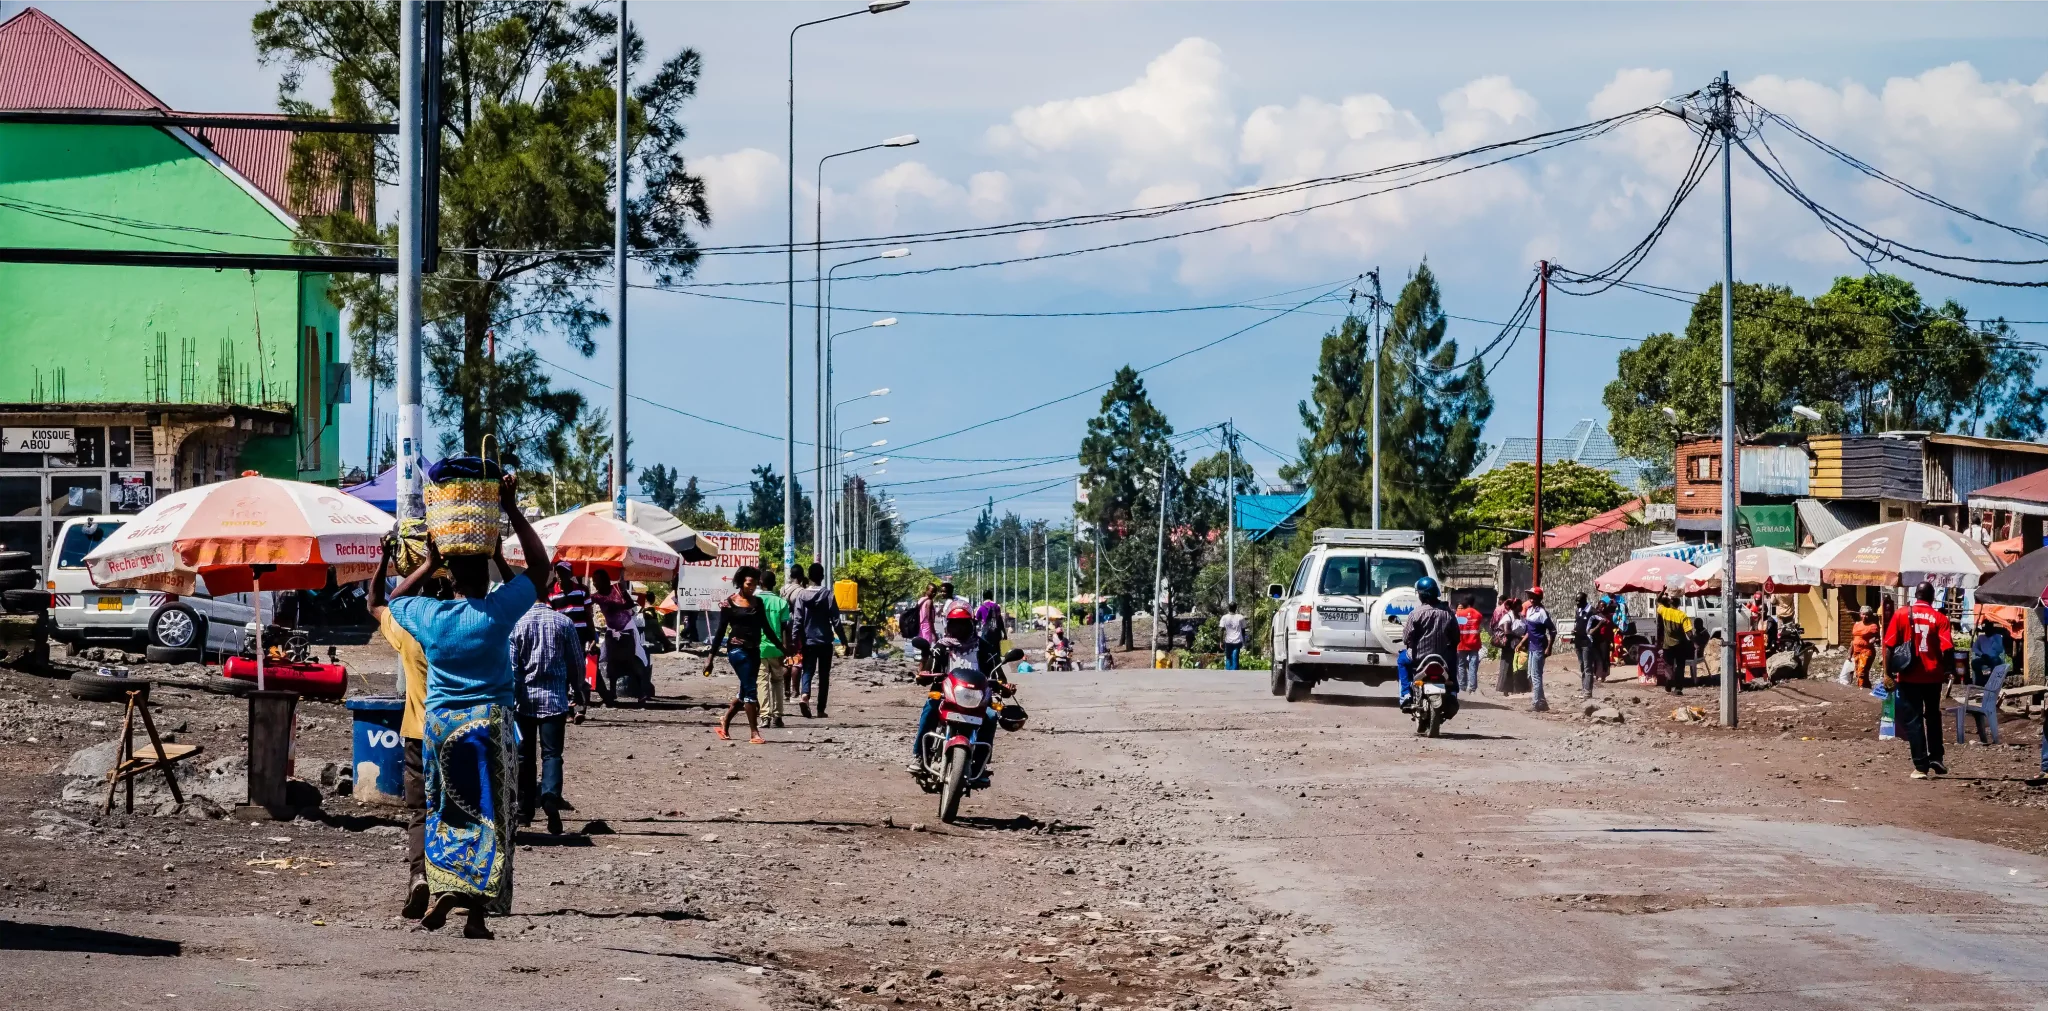 A street scene in Goma, North Kivu province, DRC.